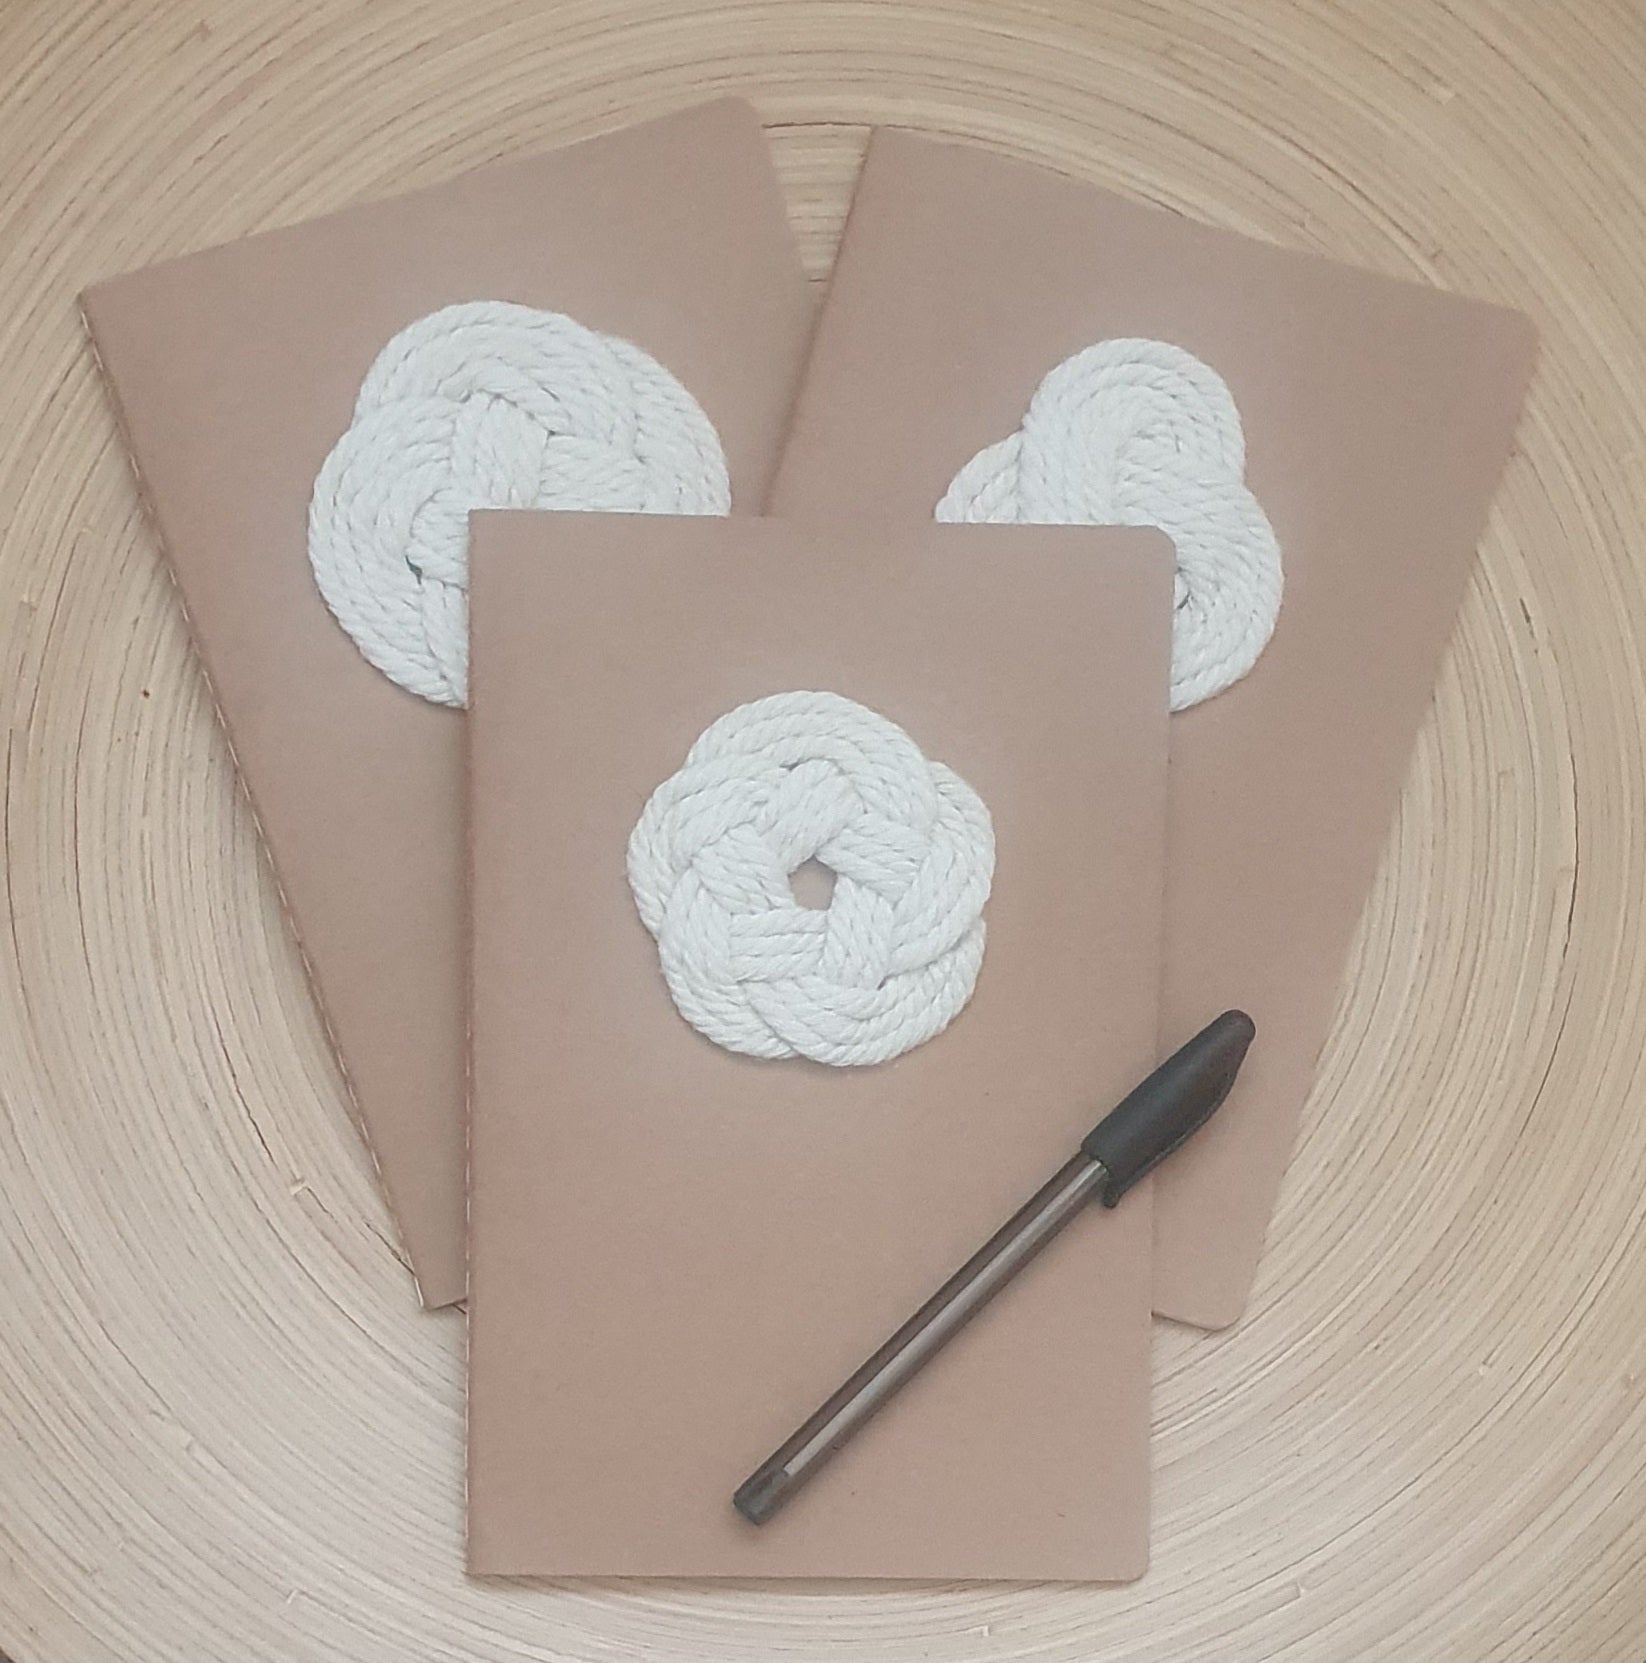 Kraft brown notebook/journal with Turk's Head Knot - 5 point design